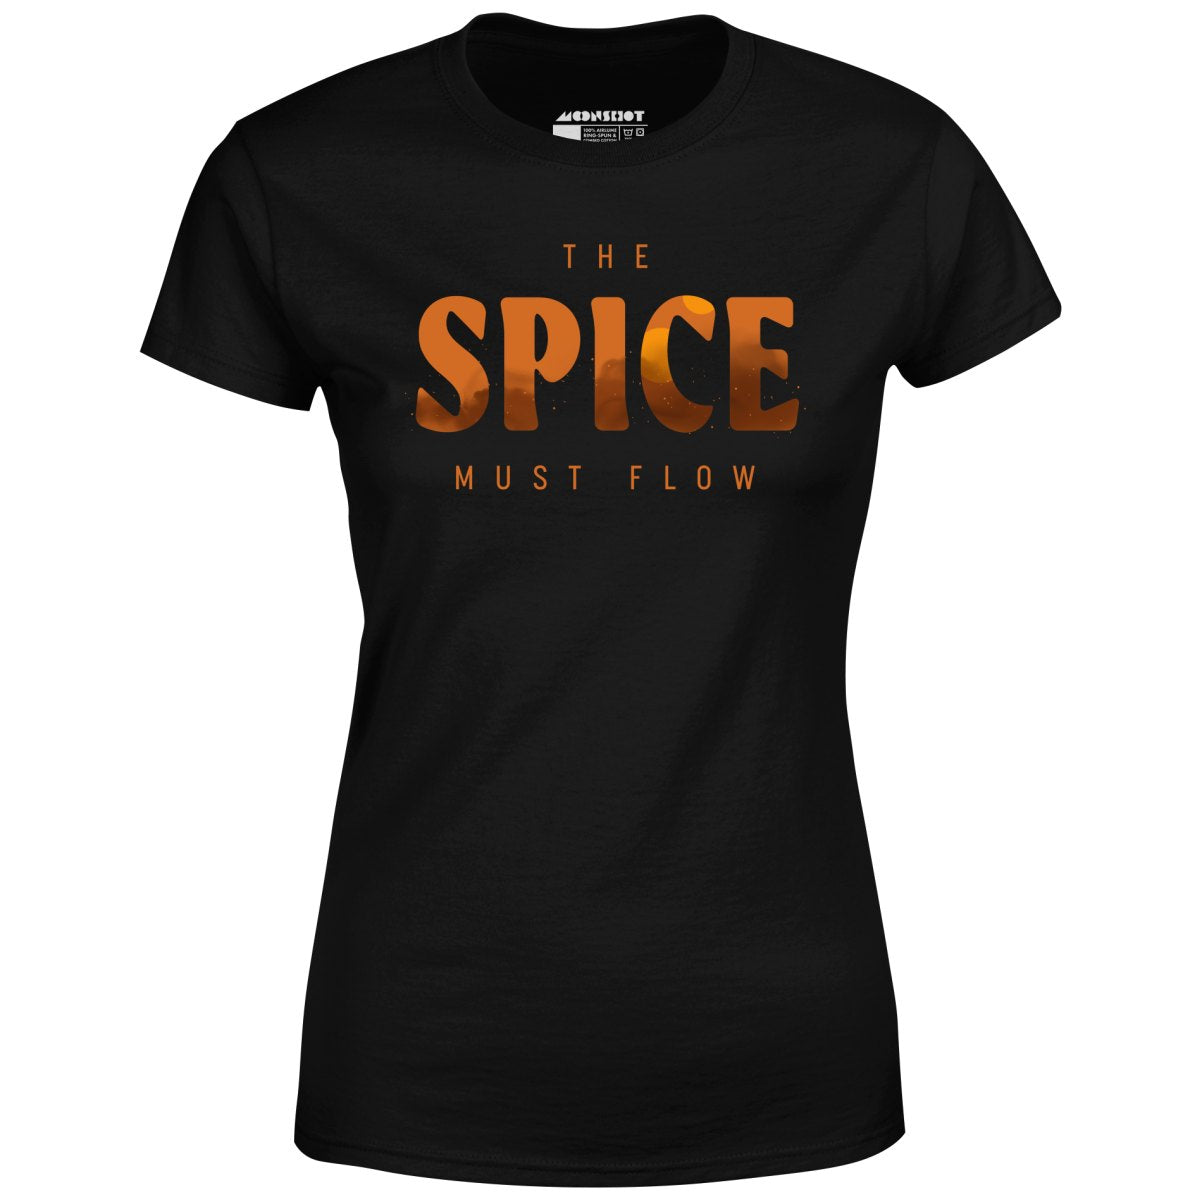 The Spice Must Flow - Women's T-Shirt